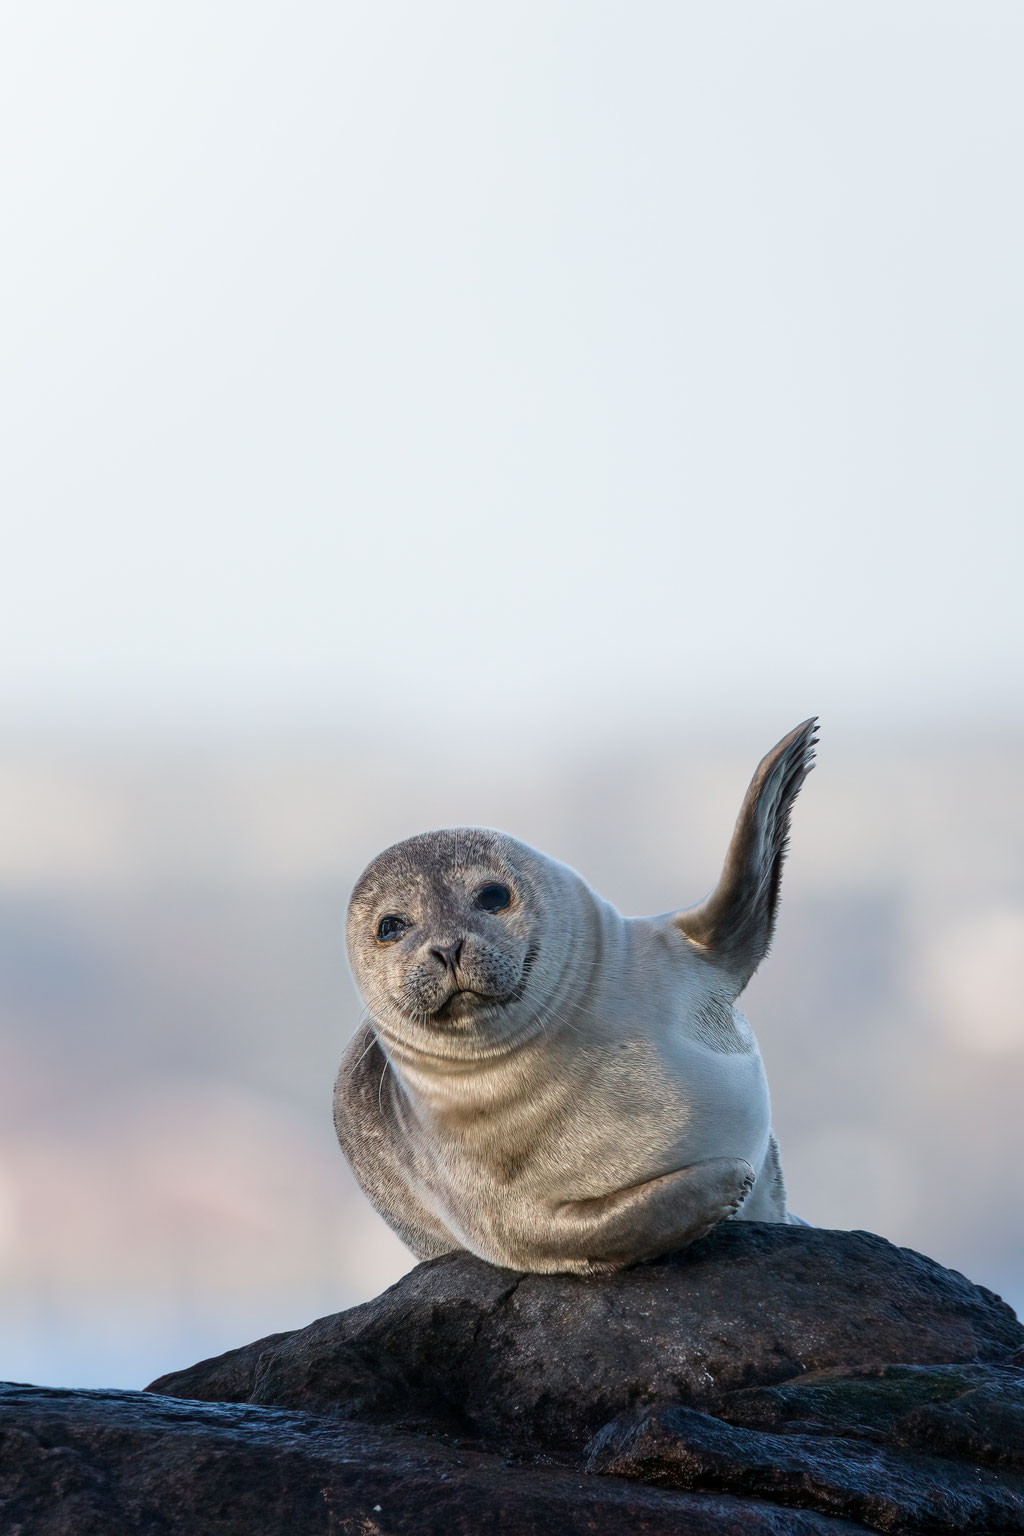 Seehund / Harbor seal (Phoca vitulina) | 01-2022 | Schleswig-Holstein, Germany